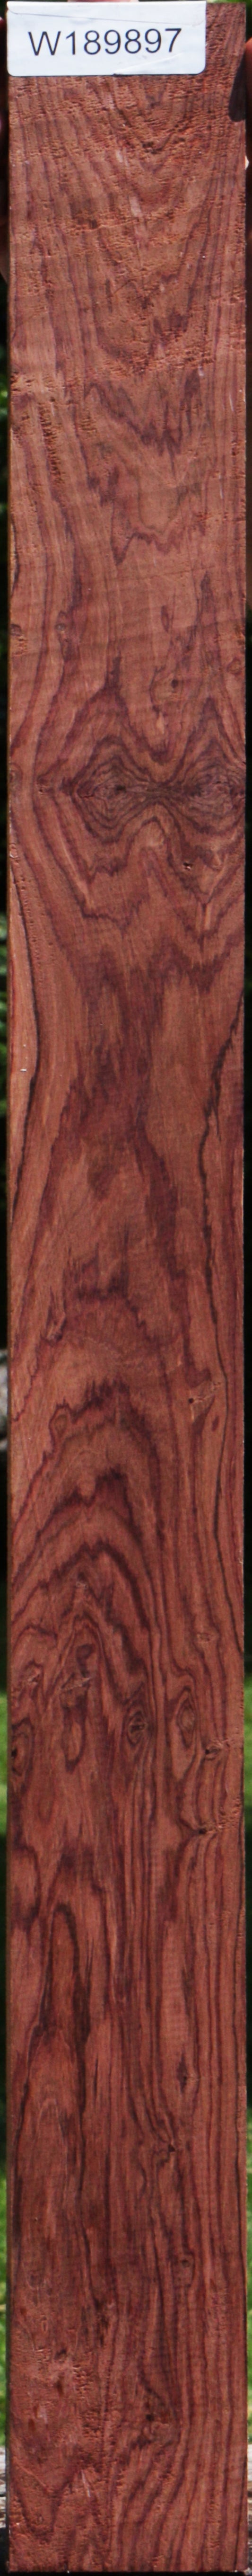 Exhibition Honduras Rosewood Lumber